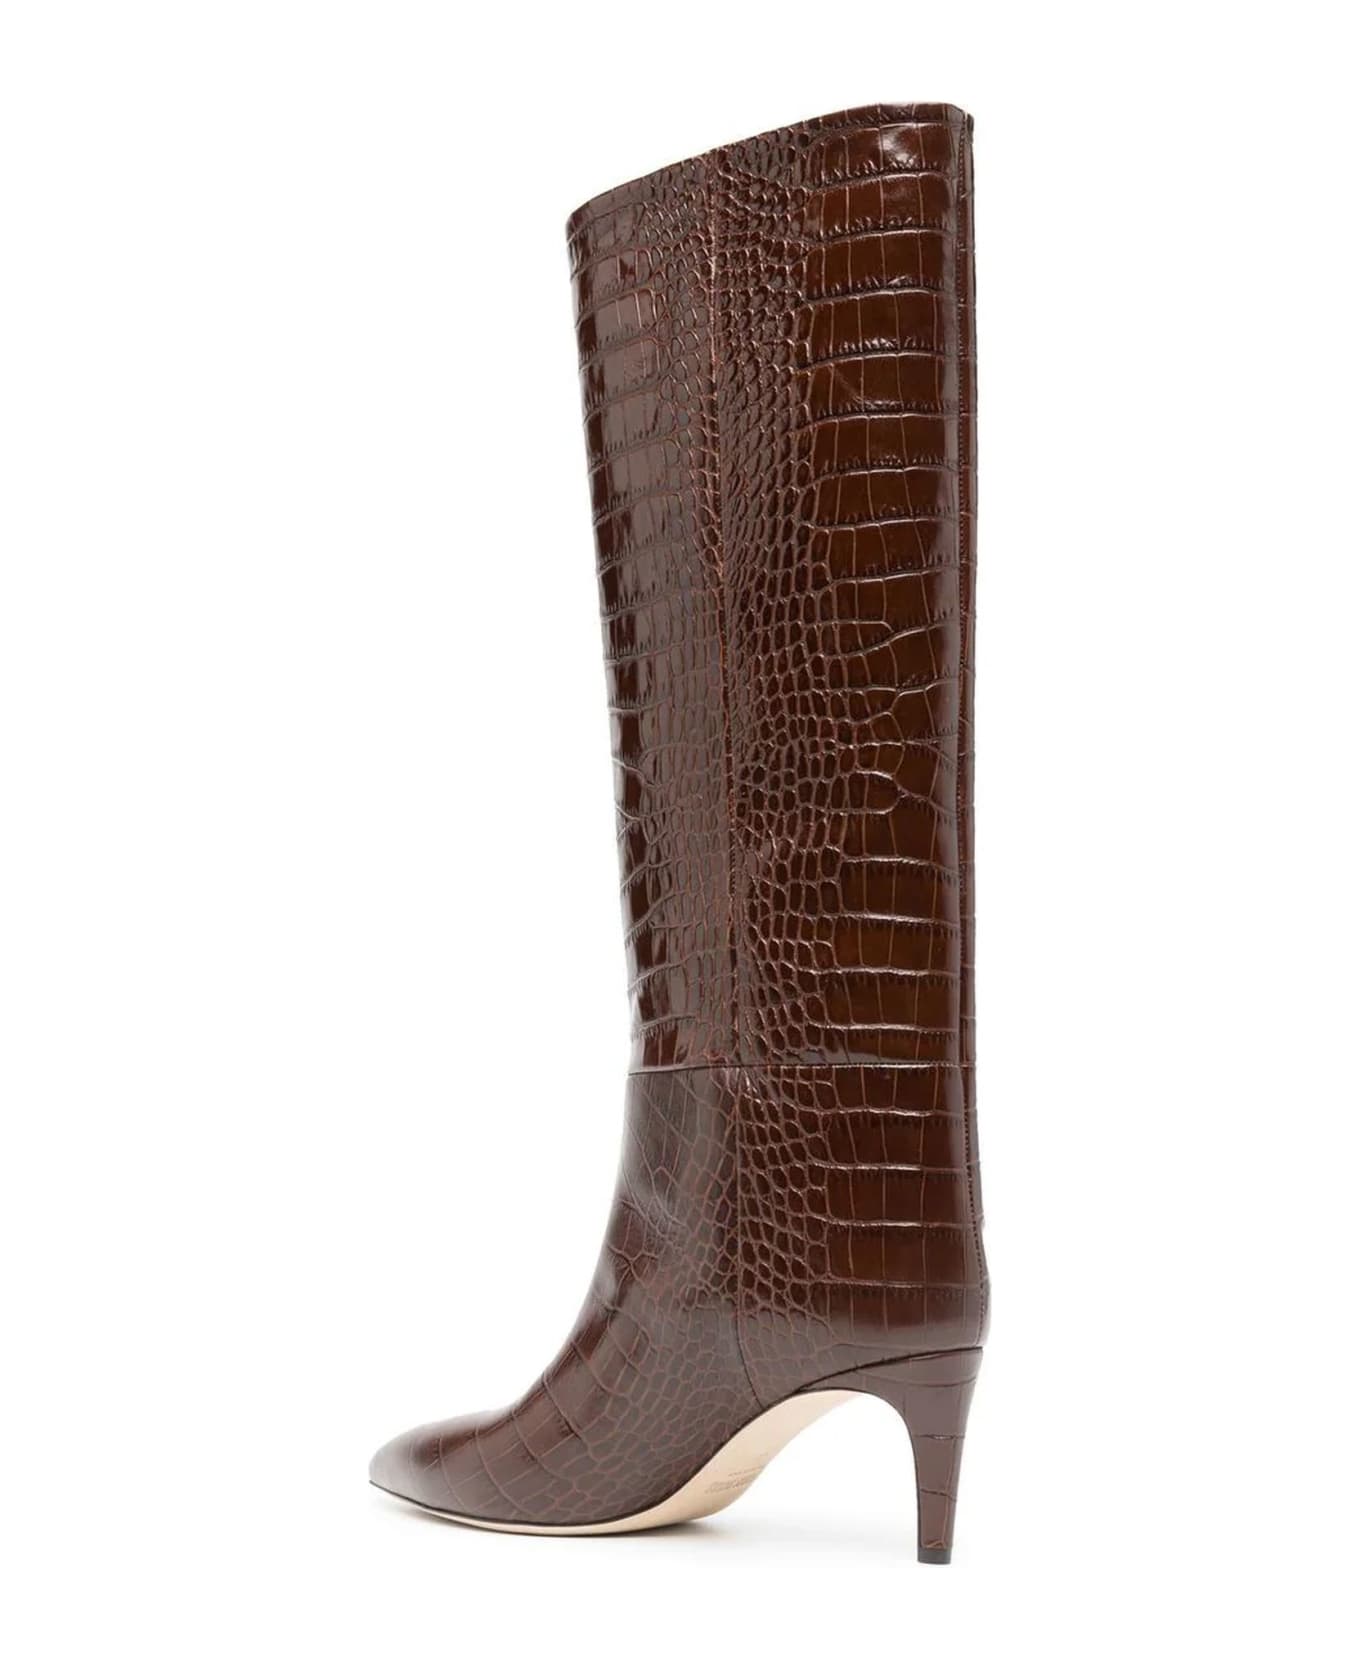 Paris Texas Brown Leather Croc-effect Stiletto Boots - Brown ブーツ